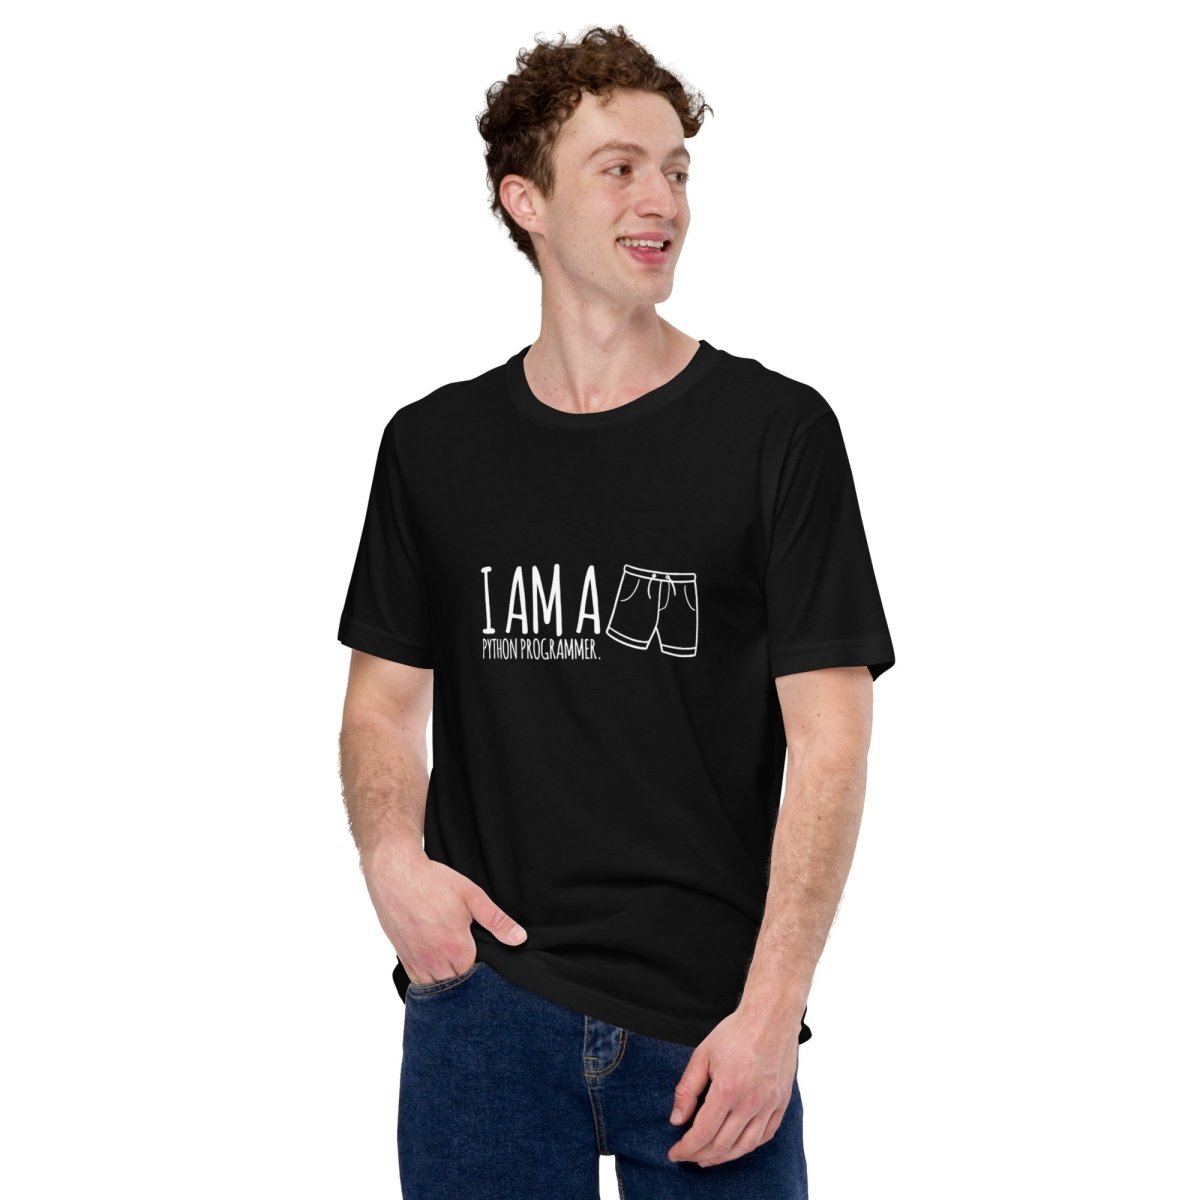 I'm a Python programmer. T - Shirt (unisex) - Black - AI Store